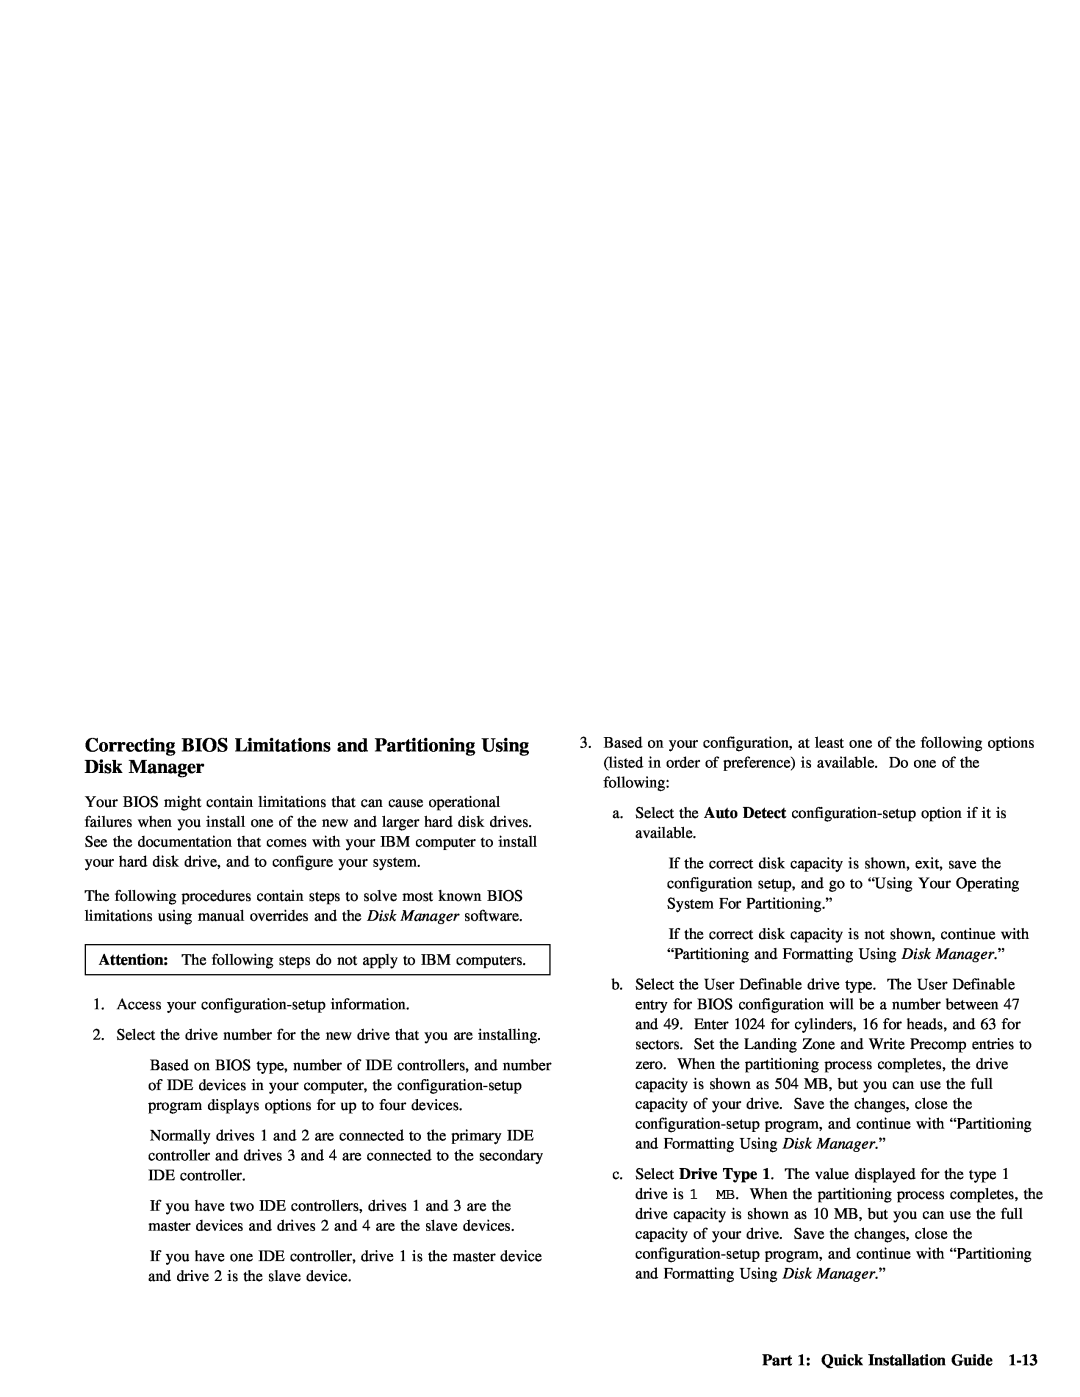 IBM ATA-3 manual Limitations, Detect, Type, Part 1 Quick Installation Guide 